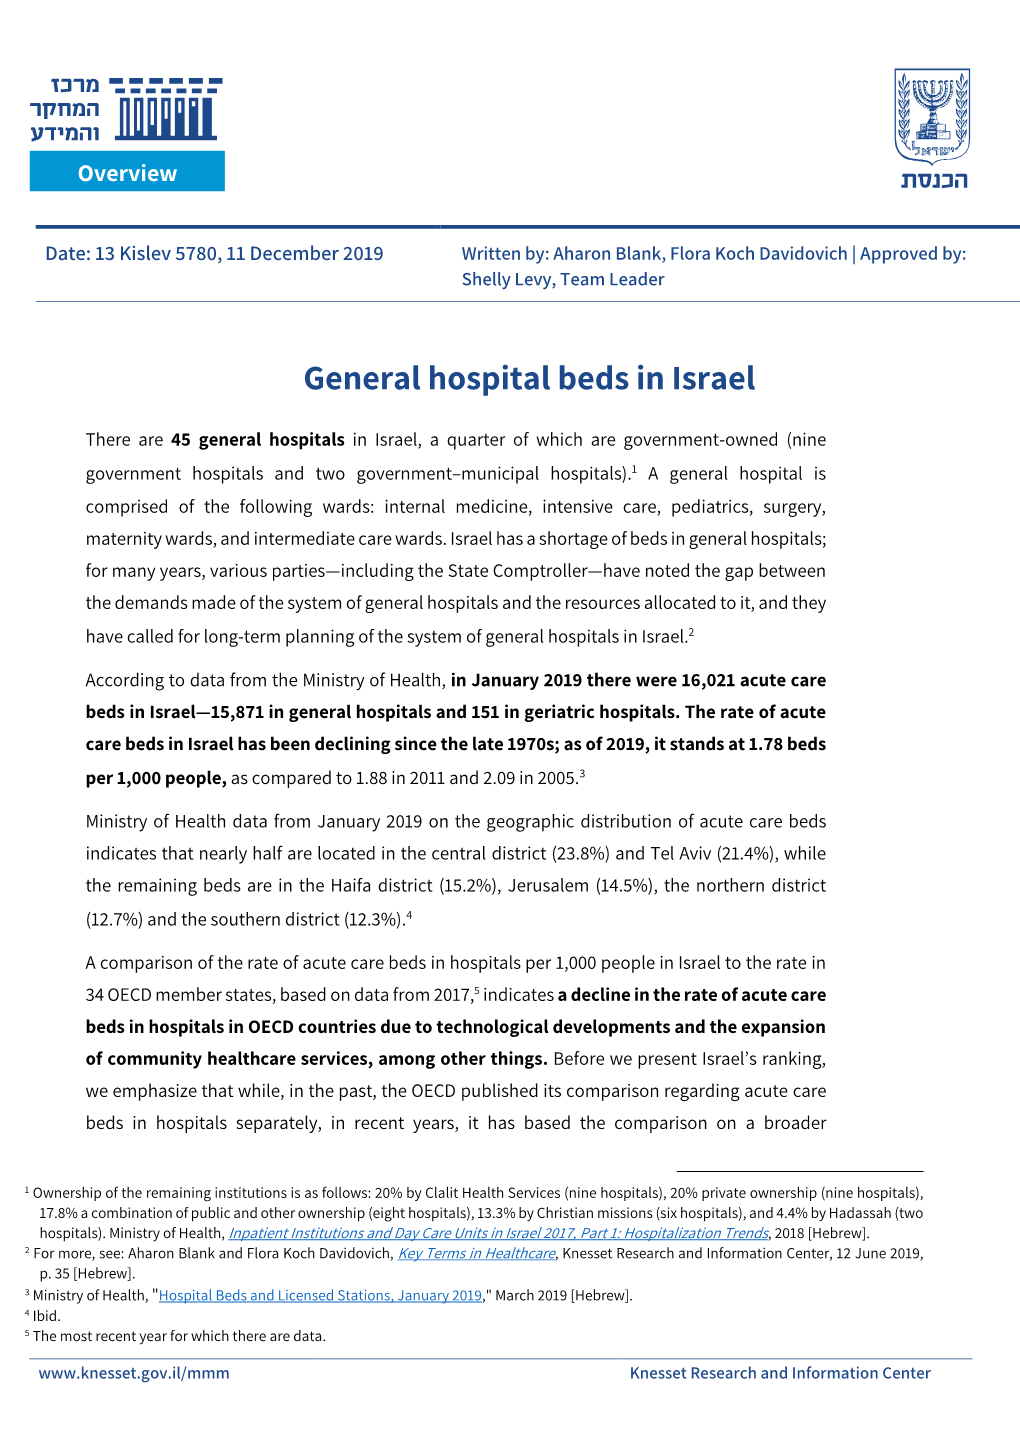 General Hospital Beds in Israel